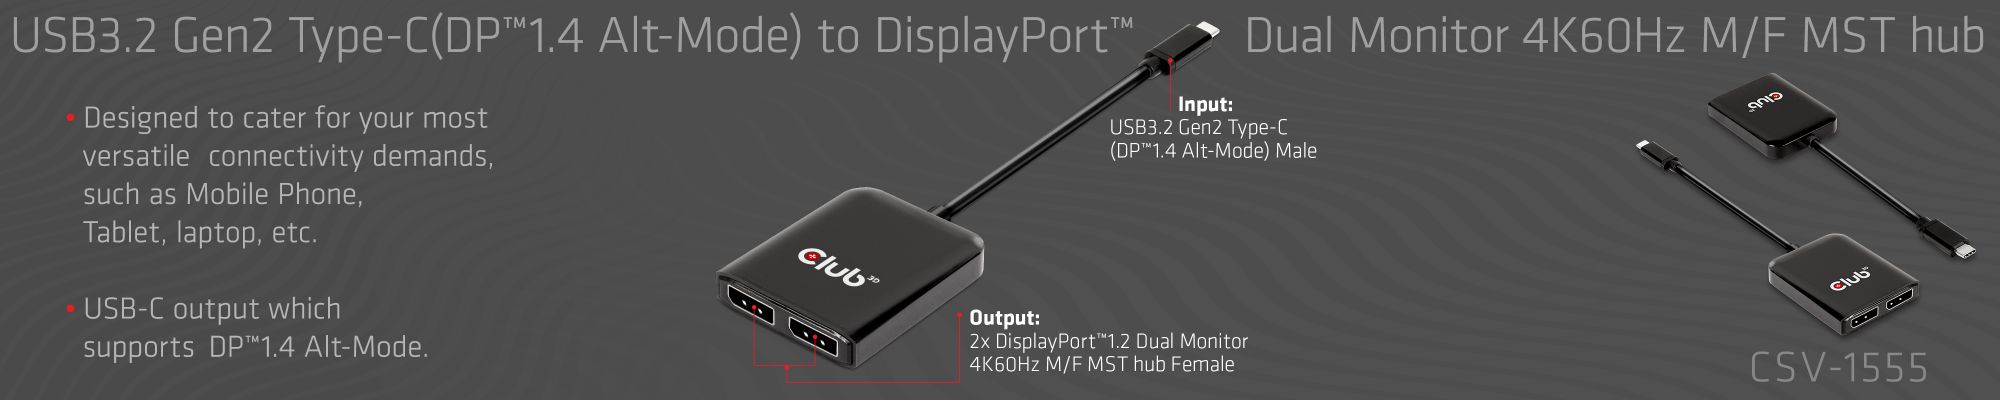 USB3.2 Gen2 Type-C(DP Alt-Mode) to DisplayPort Dual Monitor 4K60Hz M/F MST hub